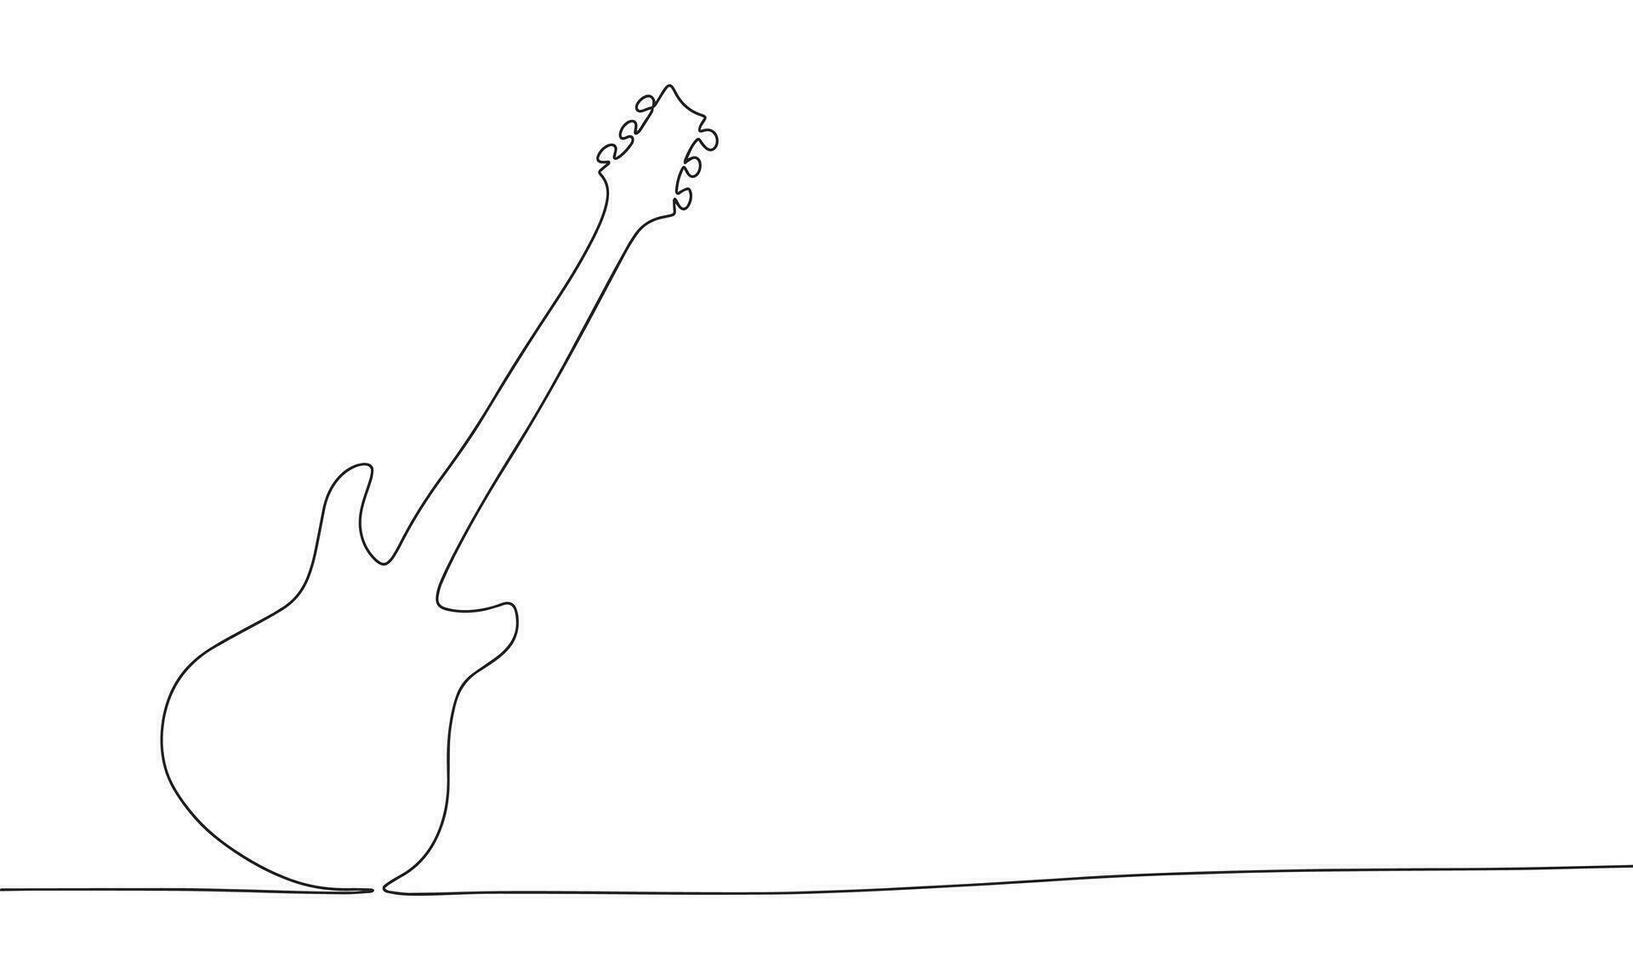 eléctrico guitarra. uno línea continuo concepto música bandera. línea arte, describir, silueta, vector ilustración.